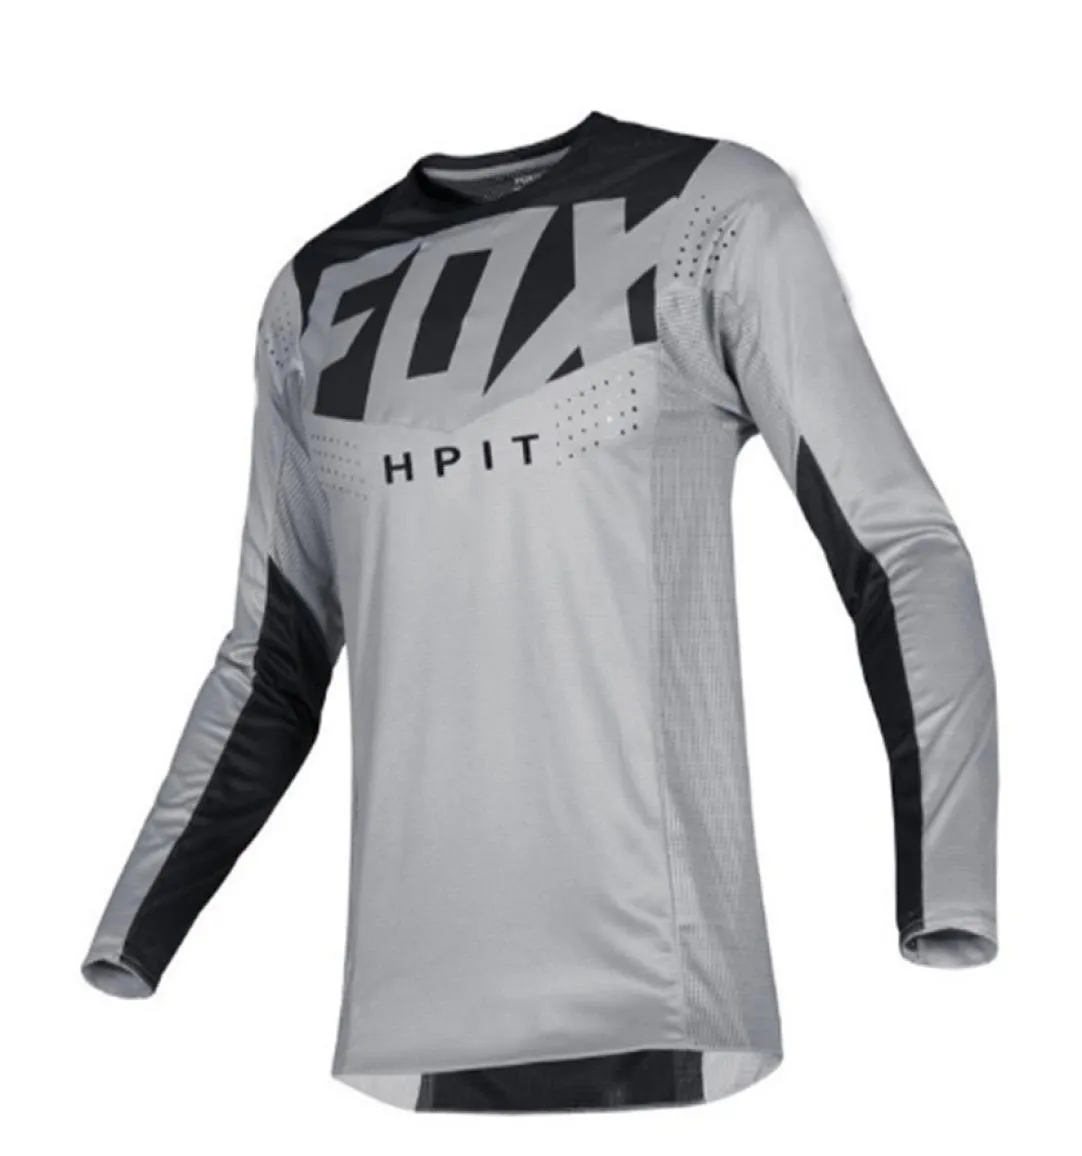 Hpit Fox New Long Sleeve Downhill Jersey Mountain Bike T shirt MTB Maillot Bicycle Shirt Uniform Cycling Clothing Motorcycle Cloth6122401